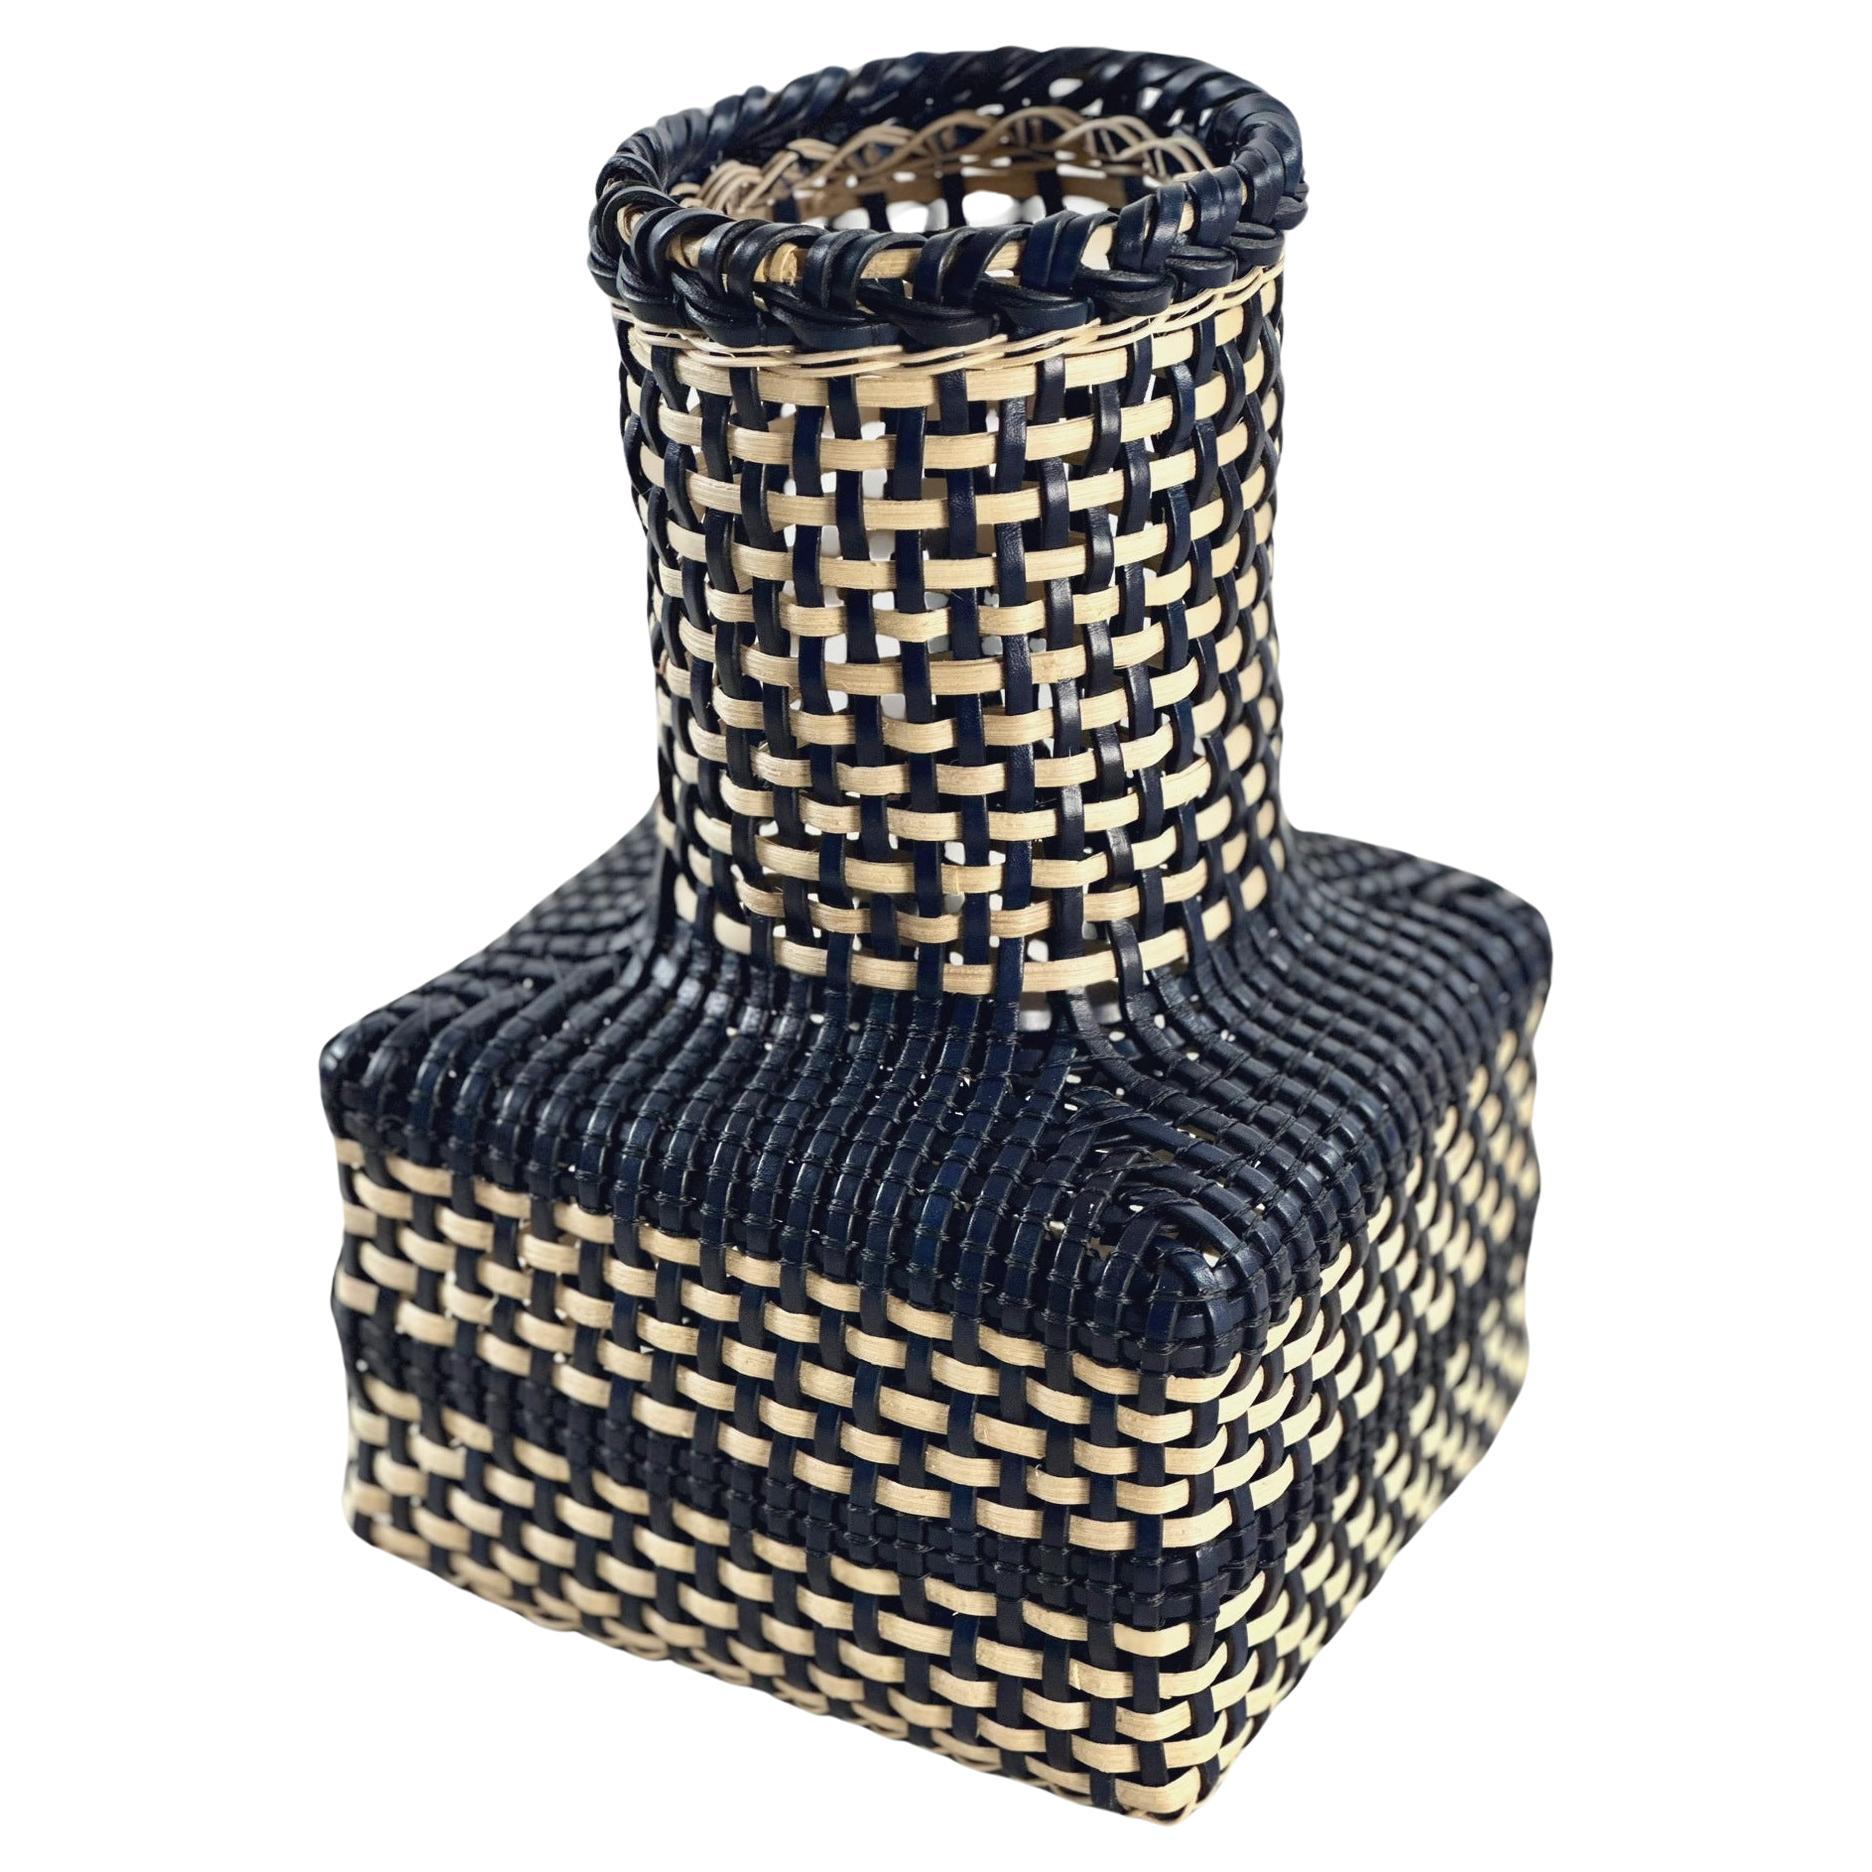 Japanese Ikebana Inspired Leather & Cane Handmade Basket Navy & Off White Color